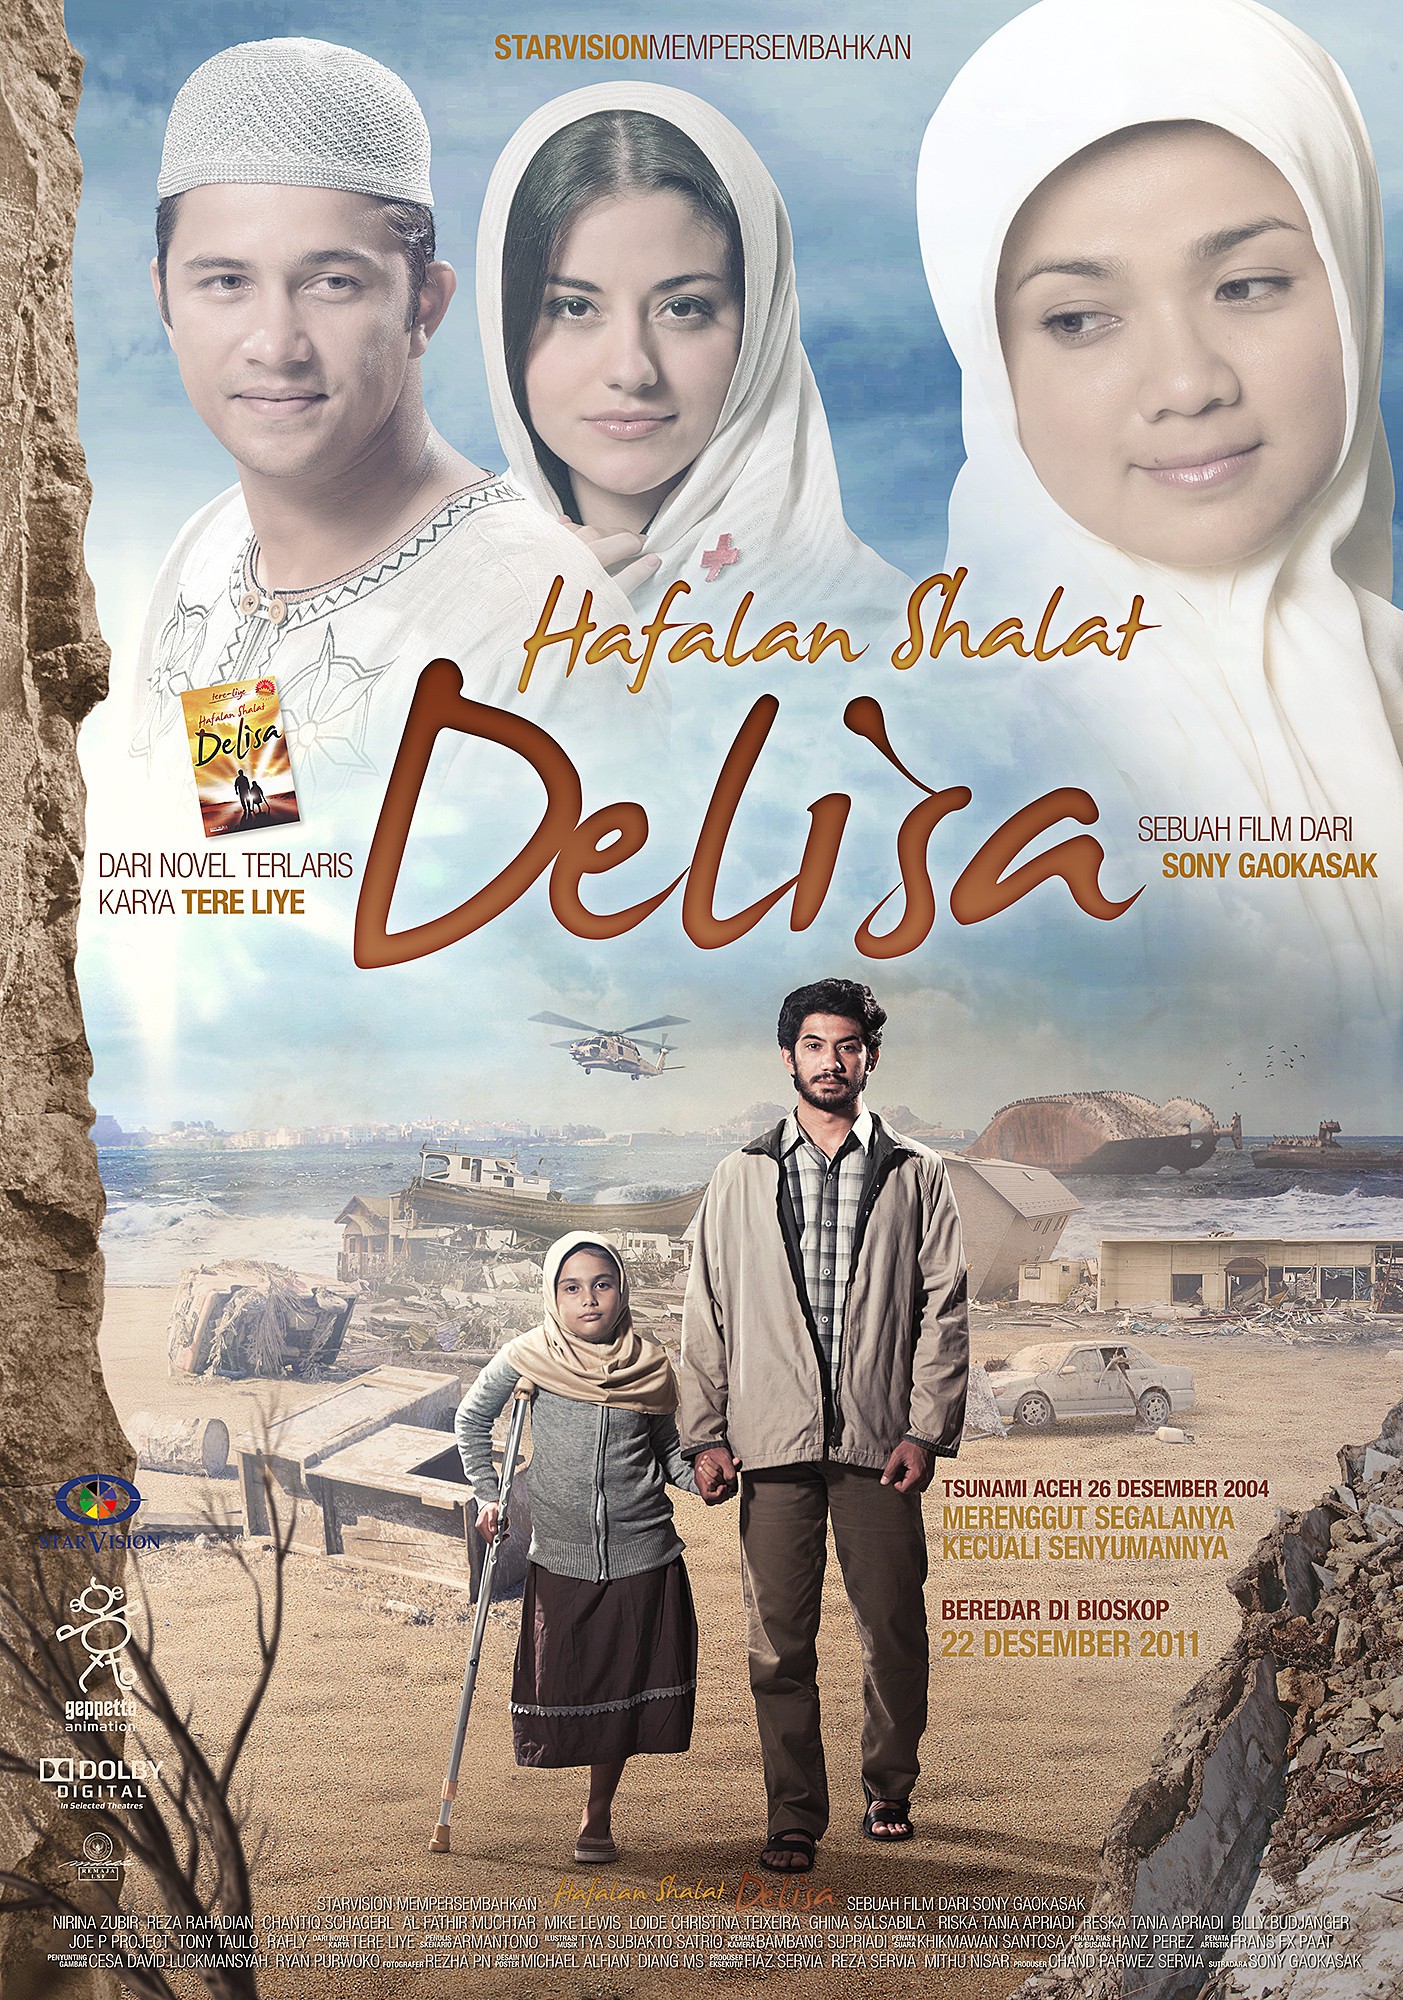 Mega Sized Movie Poster Image for Hafalan shalat Delisa (#1 of 2)